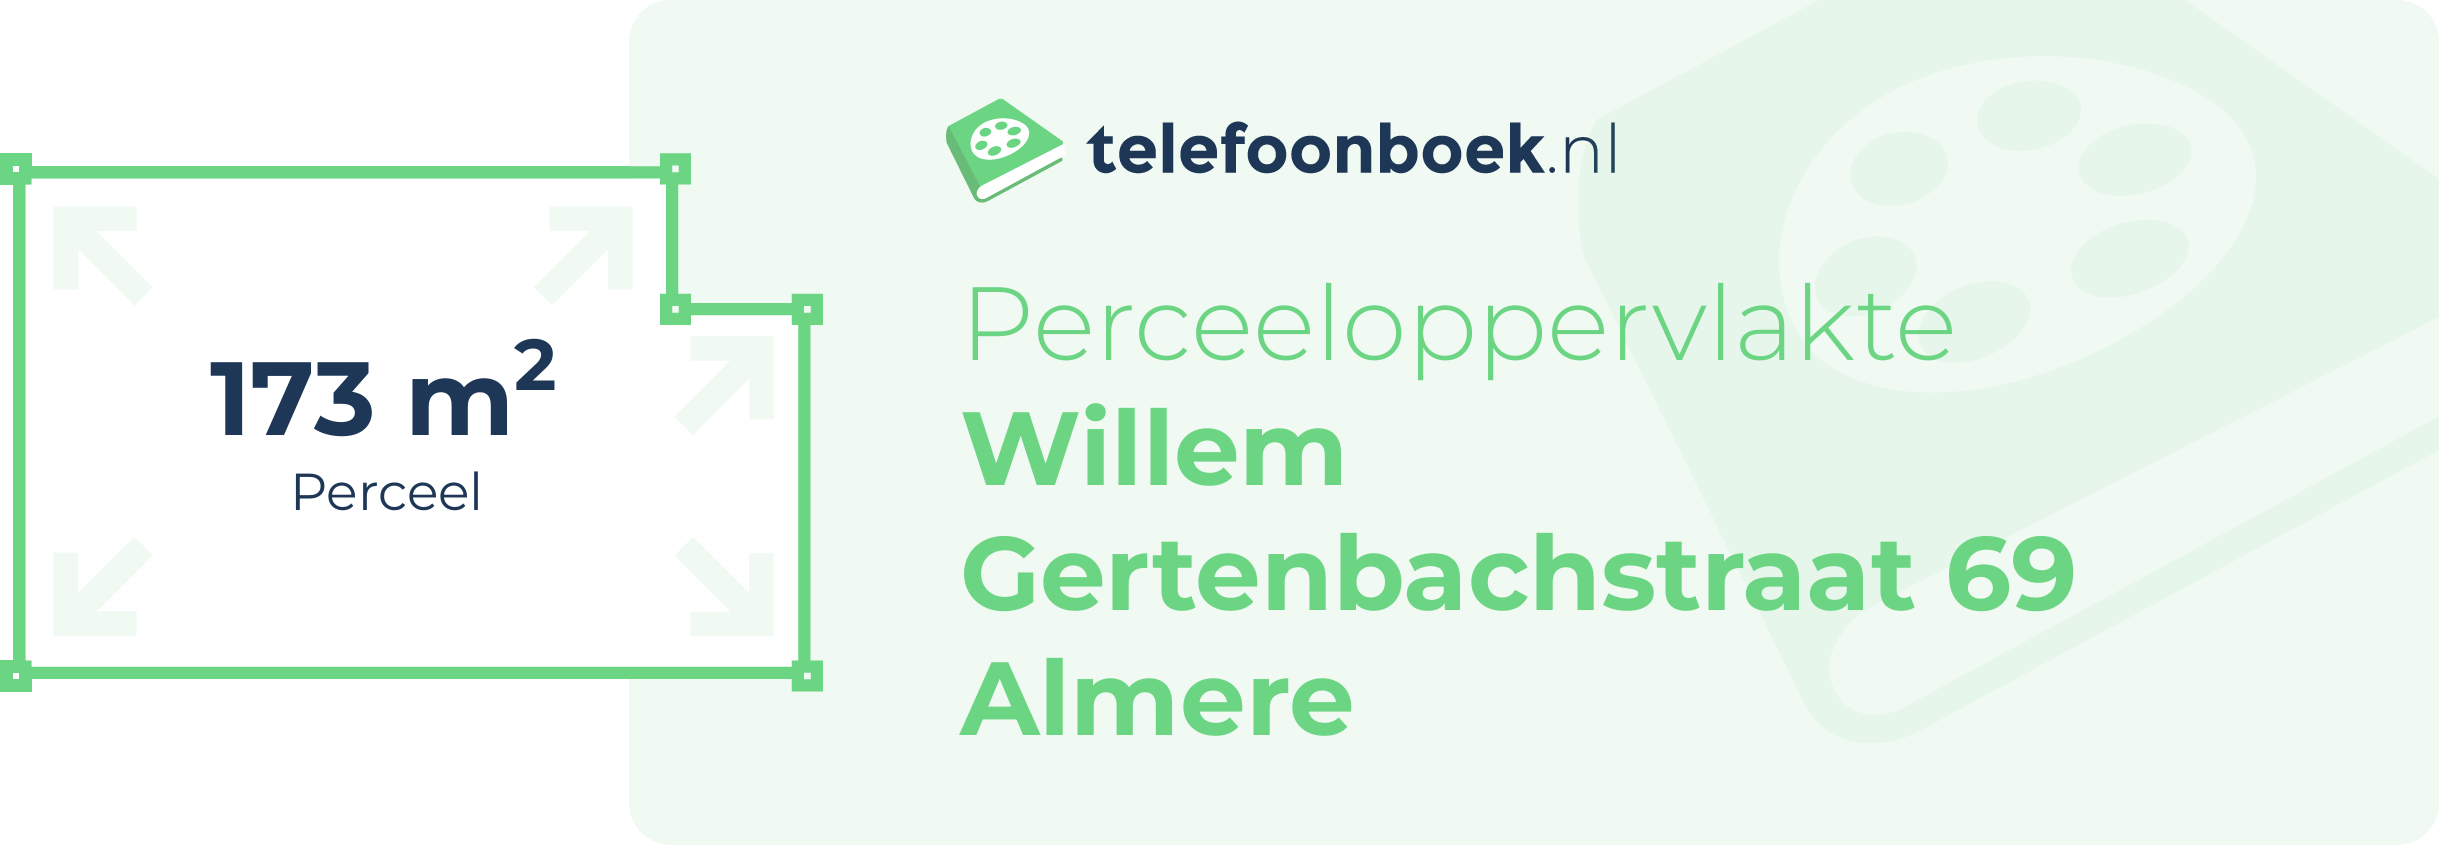 Perceeloppervlakte Willem Gertenbachstraat 69 Almere